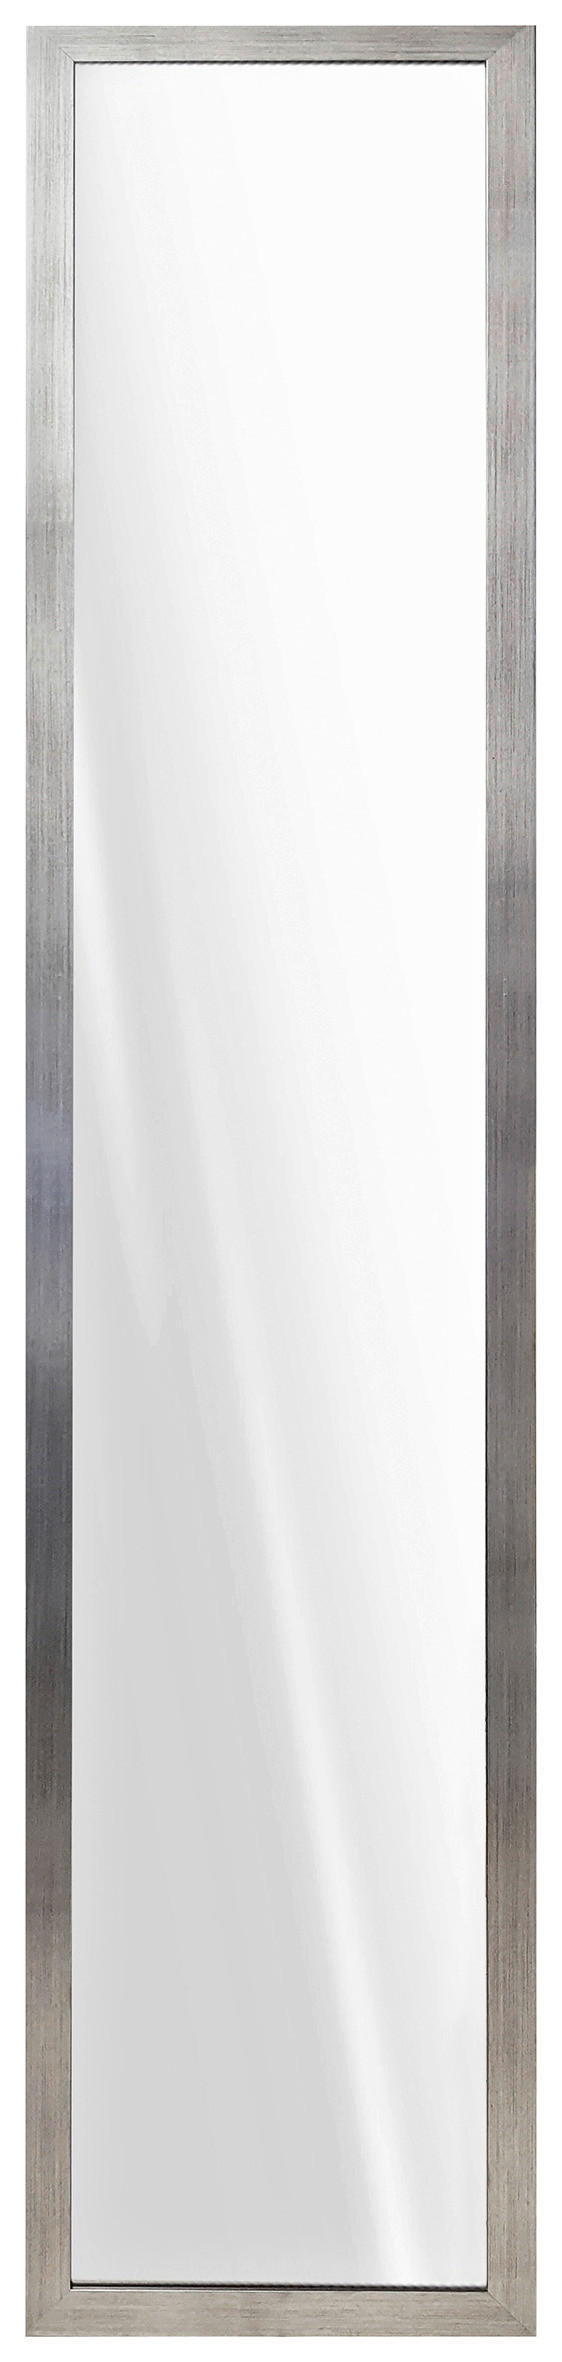 GOLVSPEGEL 36/175/3,5 cm  - silver, Design, glas/träbaserade material (36/175/3,5cm) - Carryhome